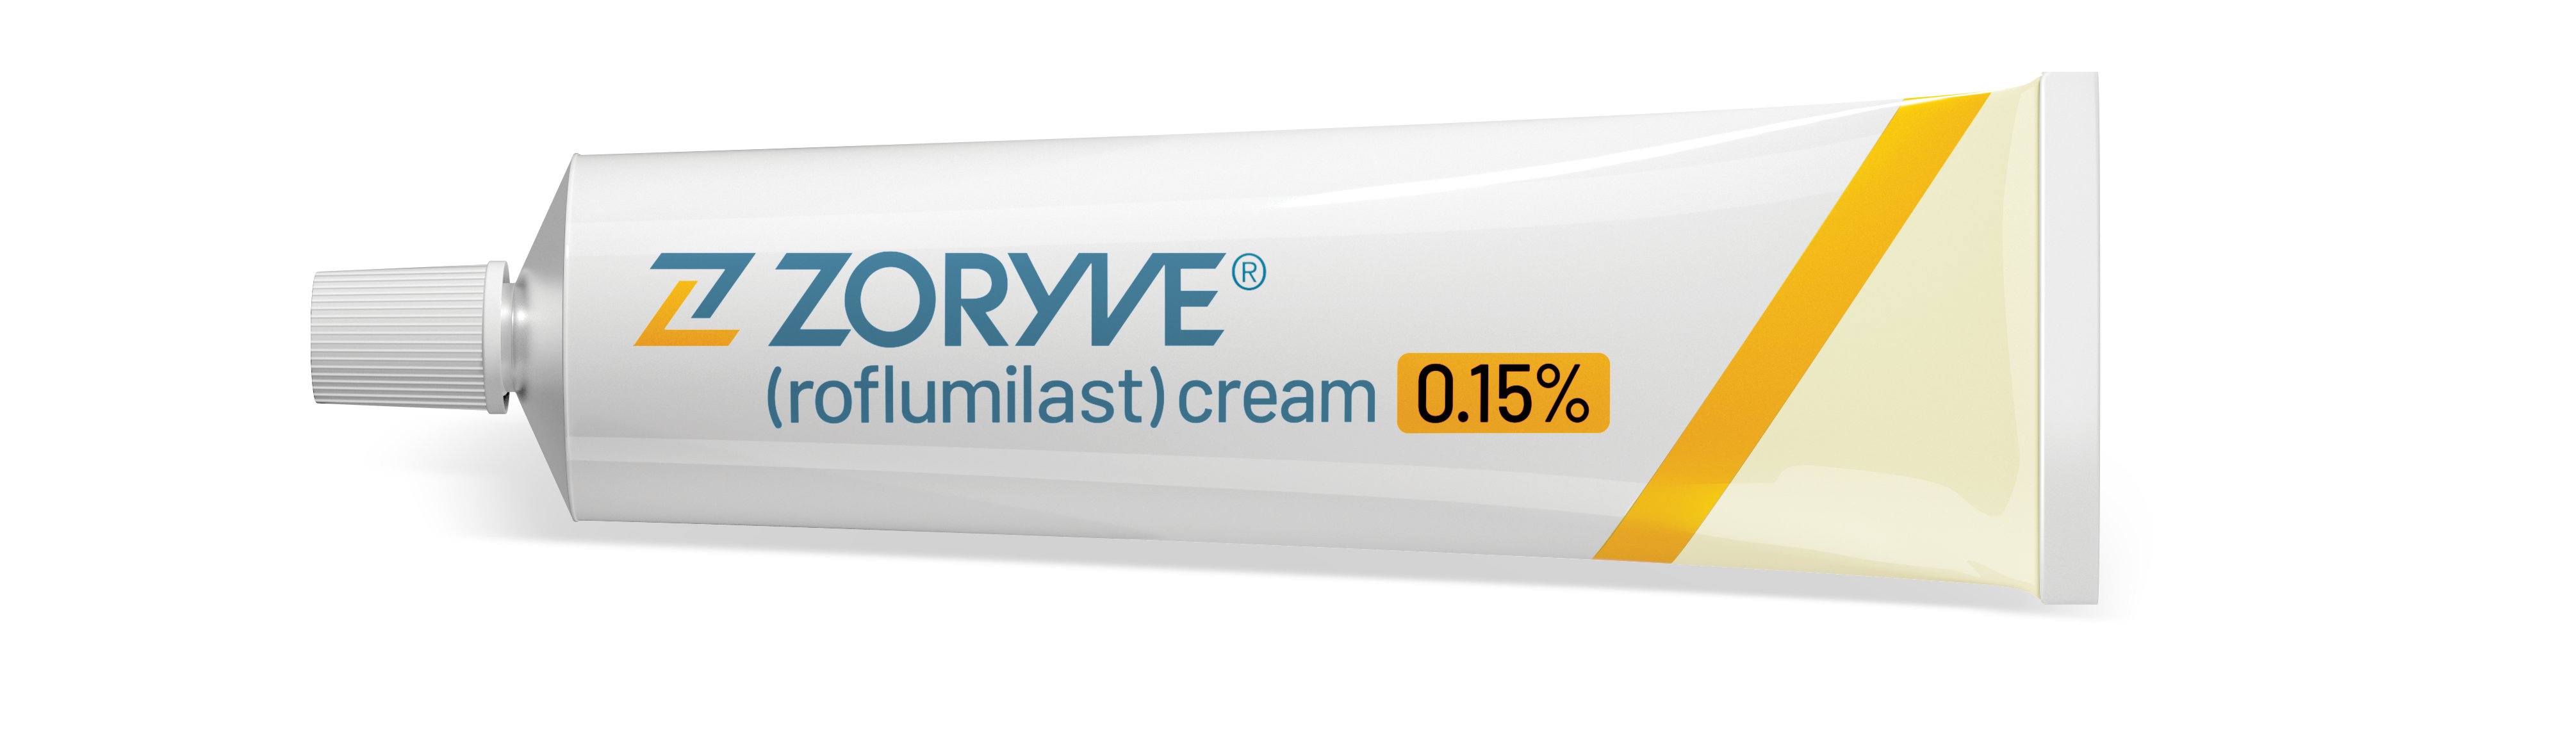 ZORYVE cream 0.15 approval: ZORYVE (roflumilast) cream 0.15% FDA Approval